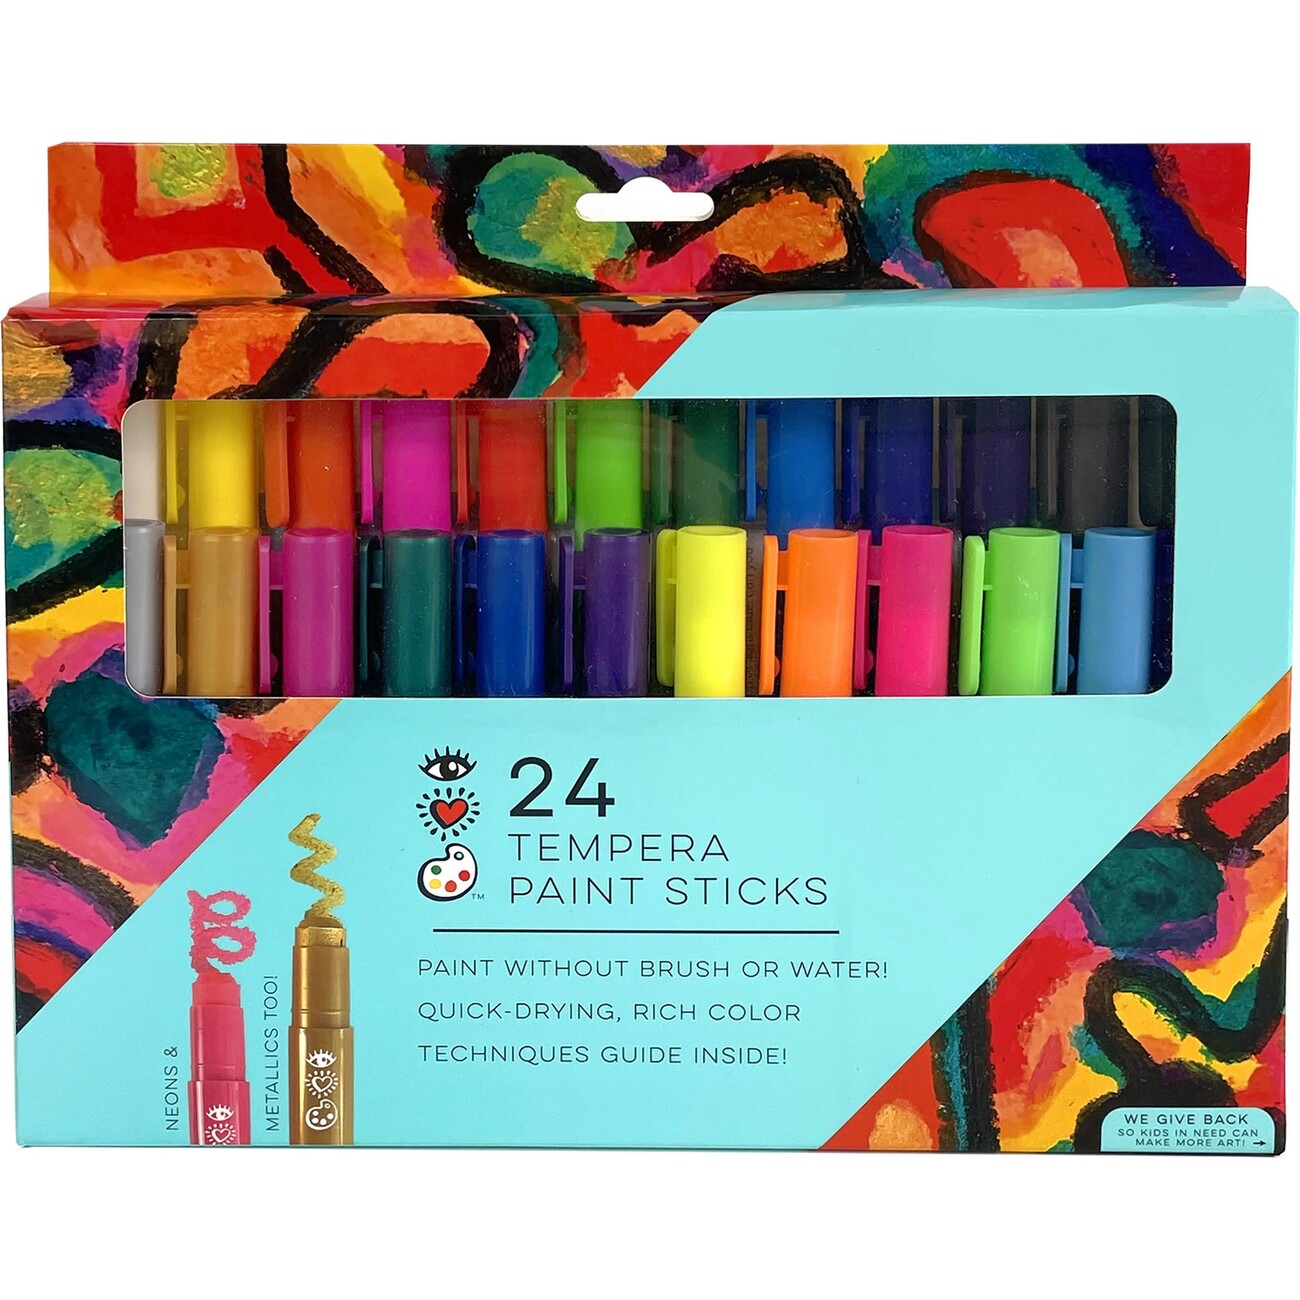 24 Tempera Paint Sticks - iHeartArt Arts & Crafts